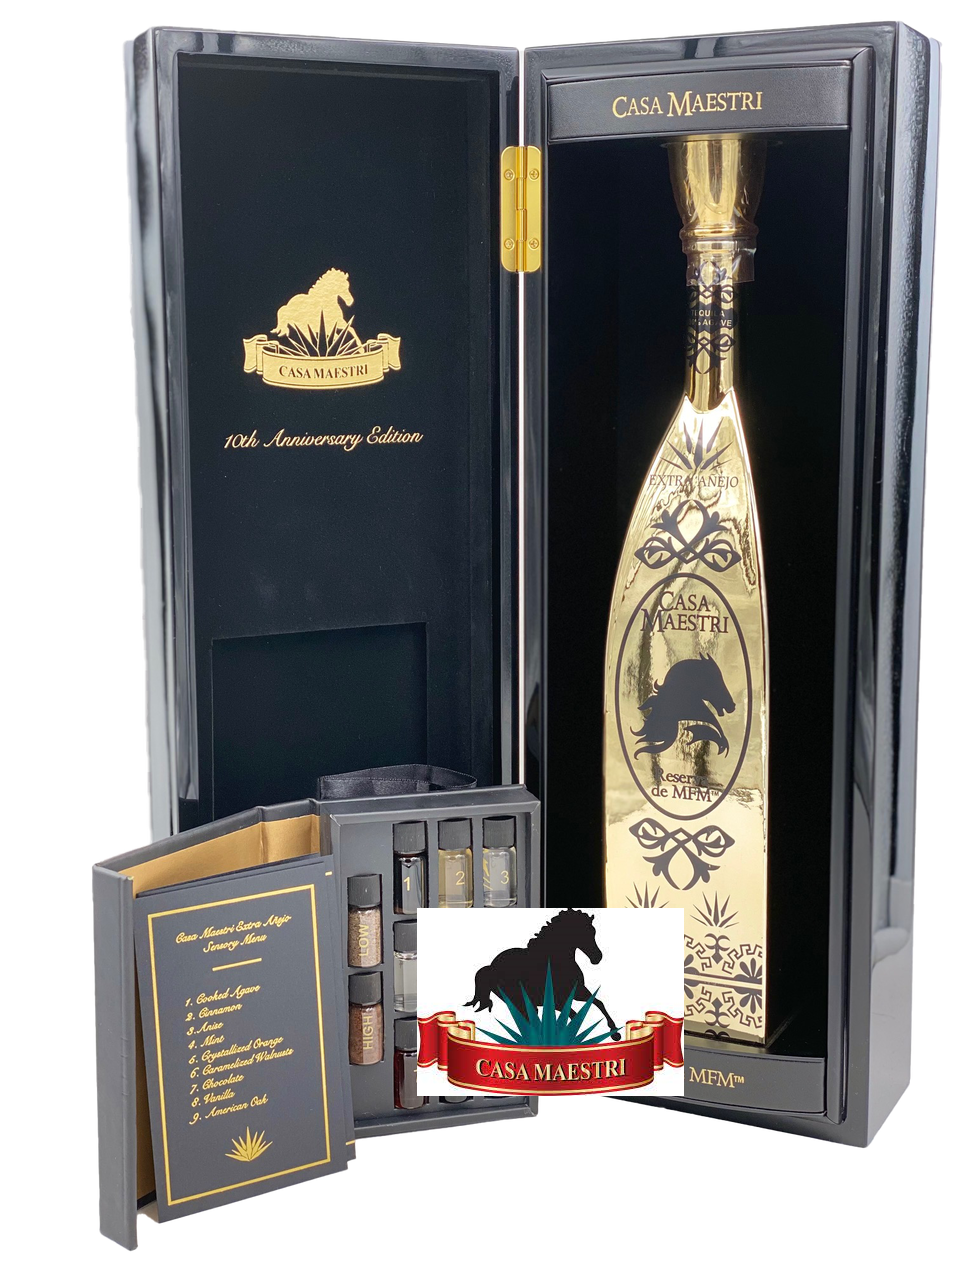 Tequila Casa Maestri Reserva MFM EXTRA AÑEJO 7050 ml 100% Agave - 750ml kit de aromas